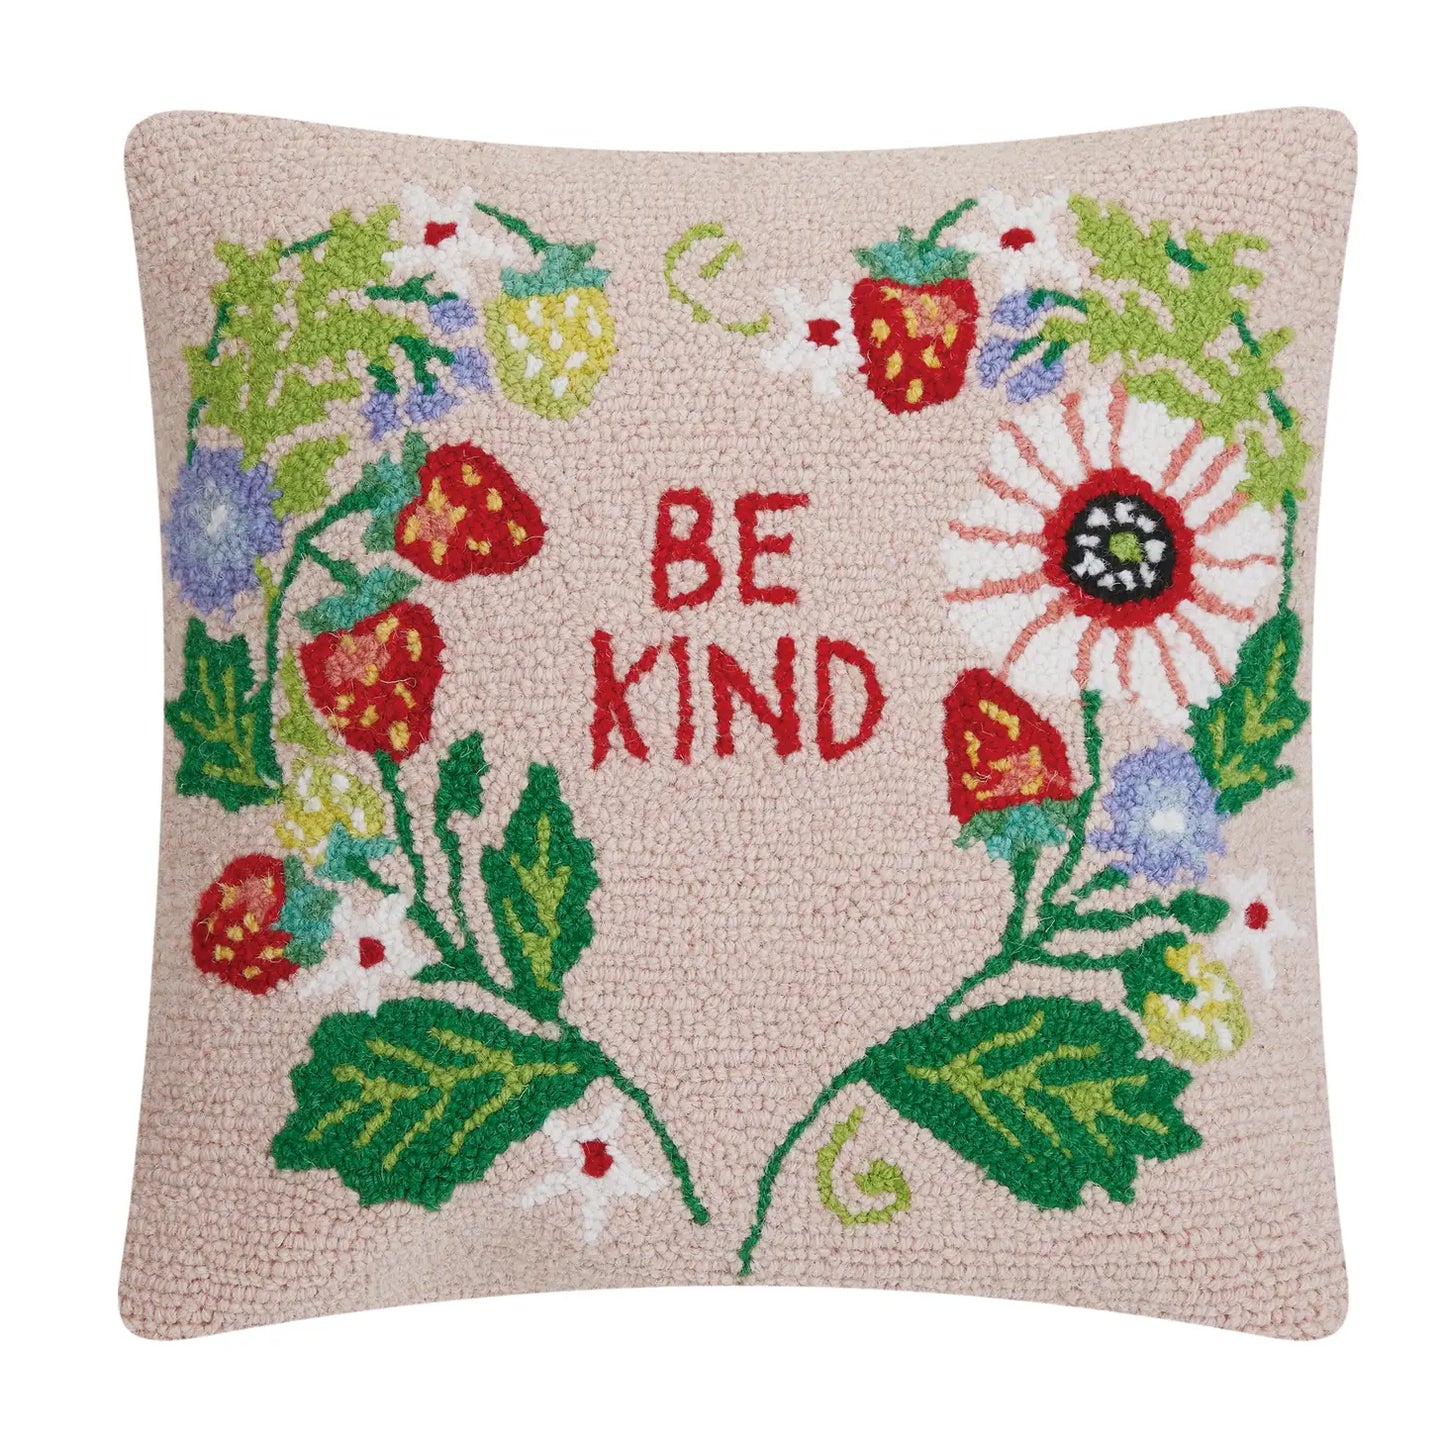 Be Kind Cushion PRE ORDER